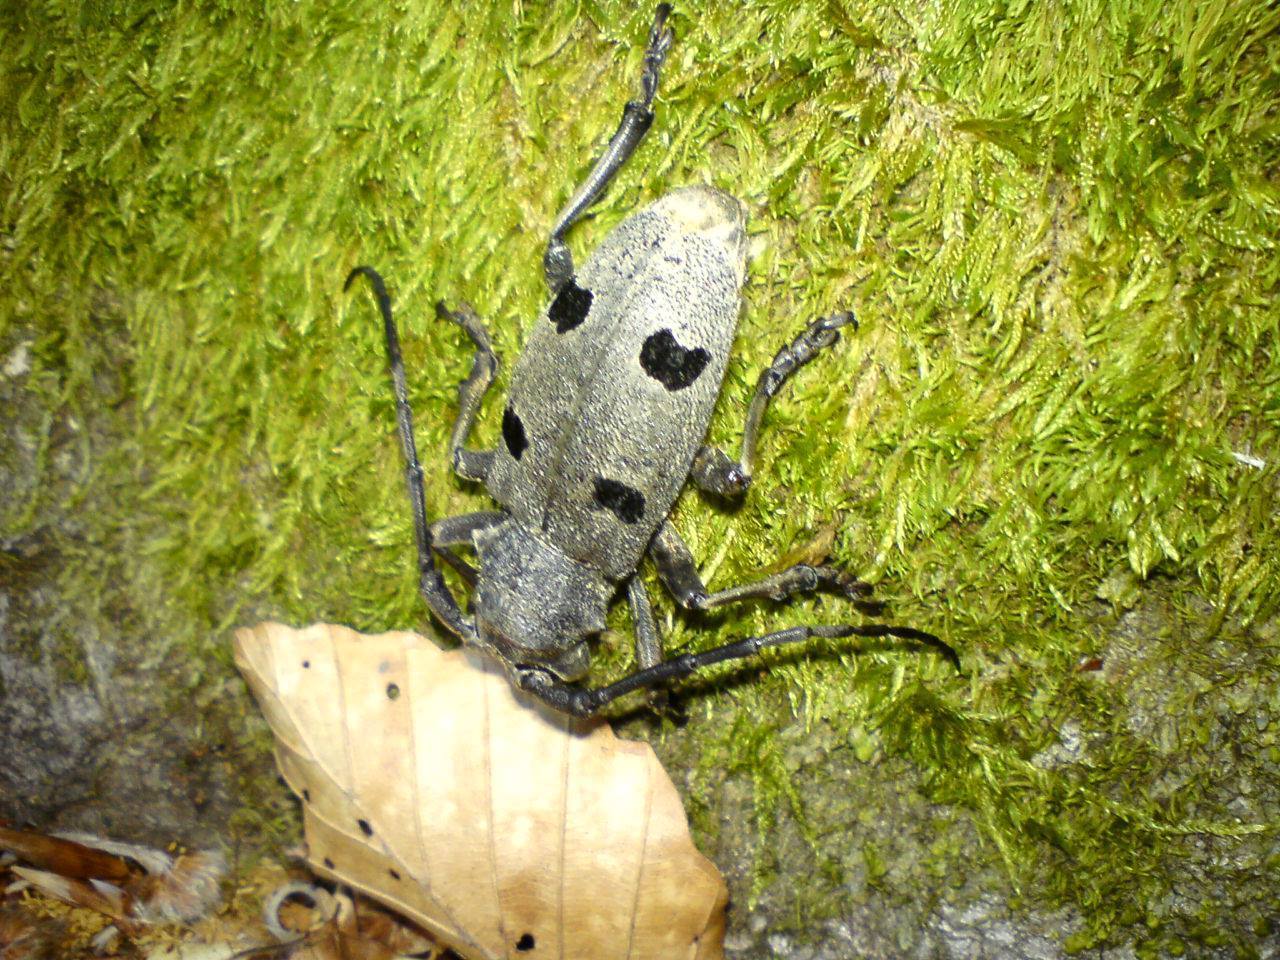 Image of Long-horned beetle